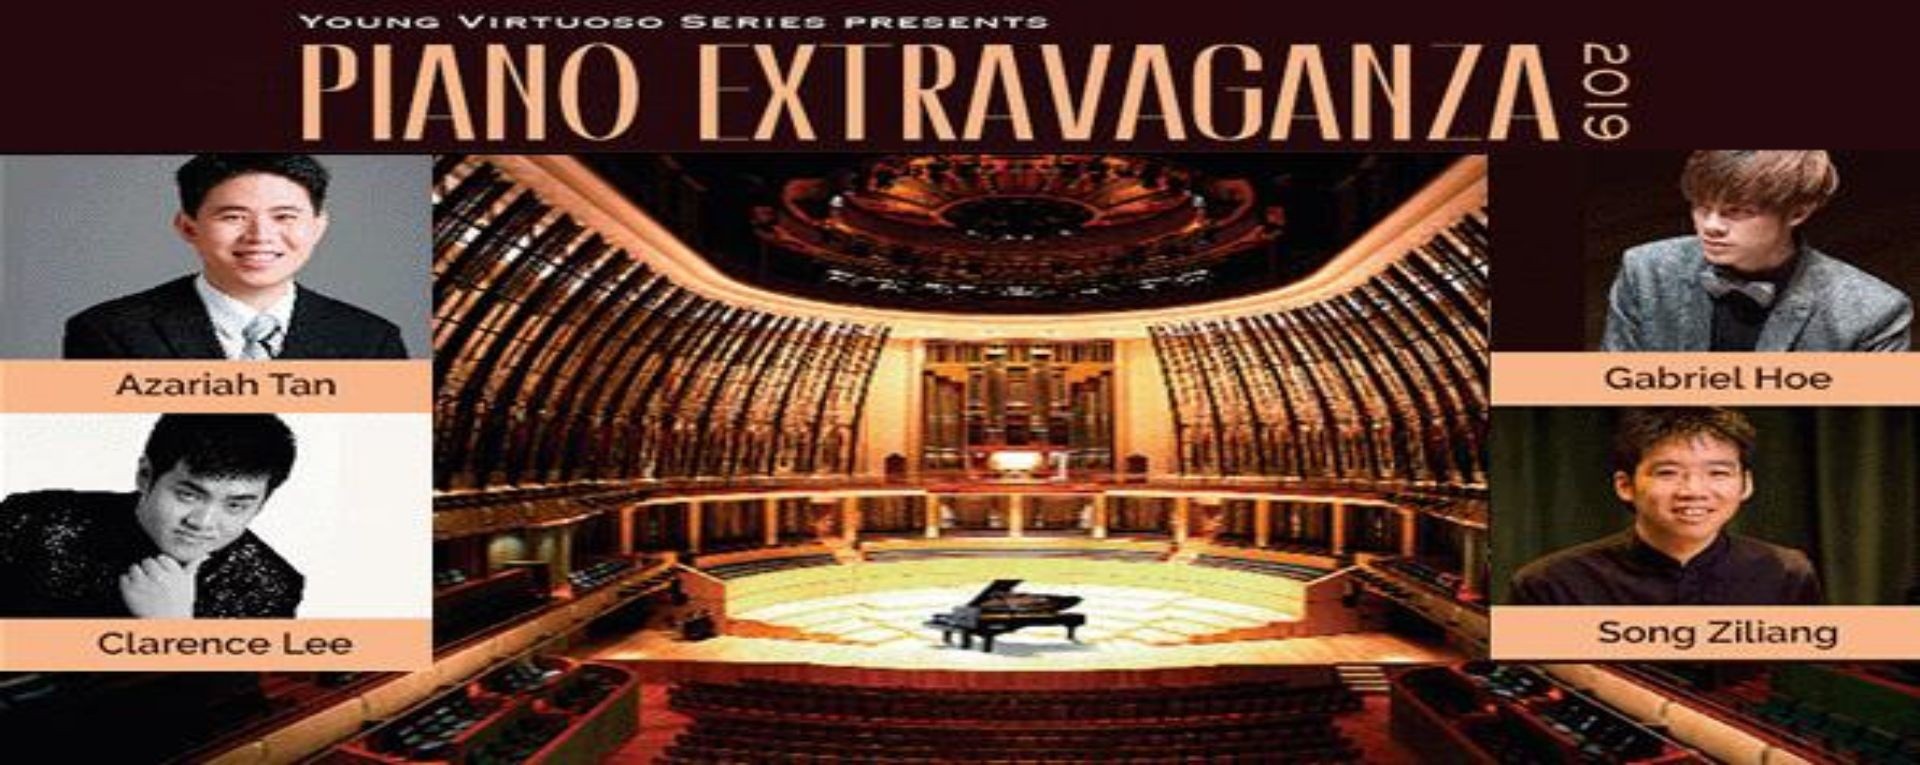 Young Virtuoso Series Presents: Piano Extravaganza 2019